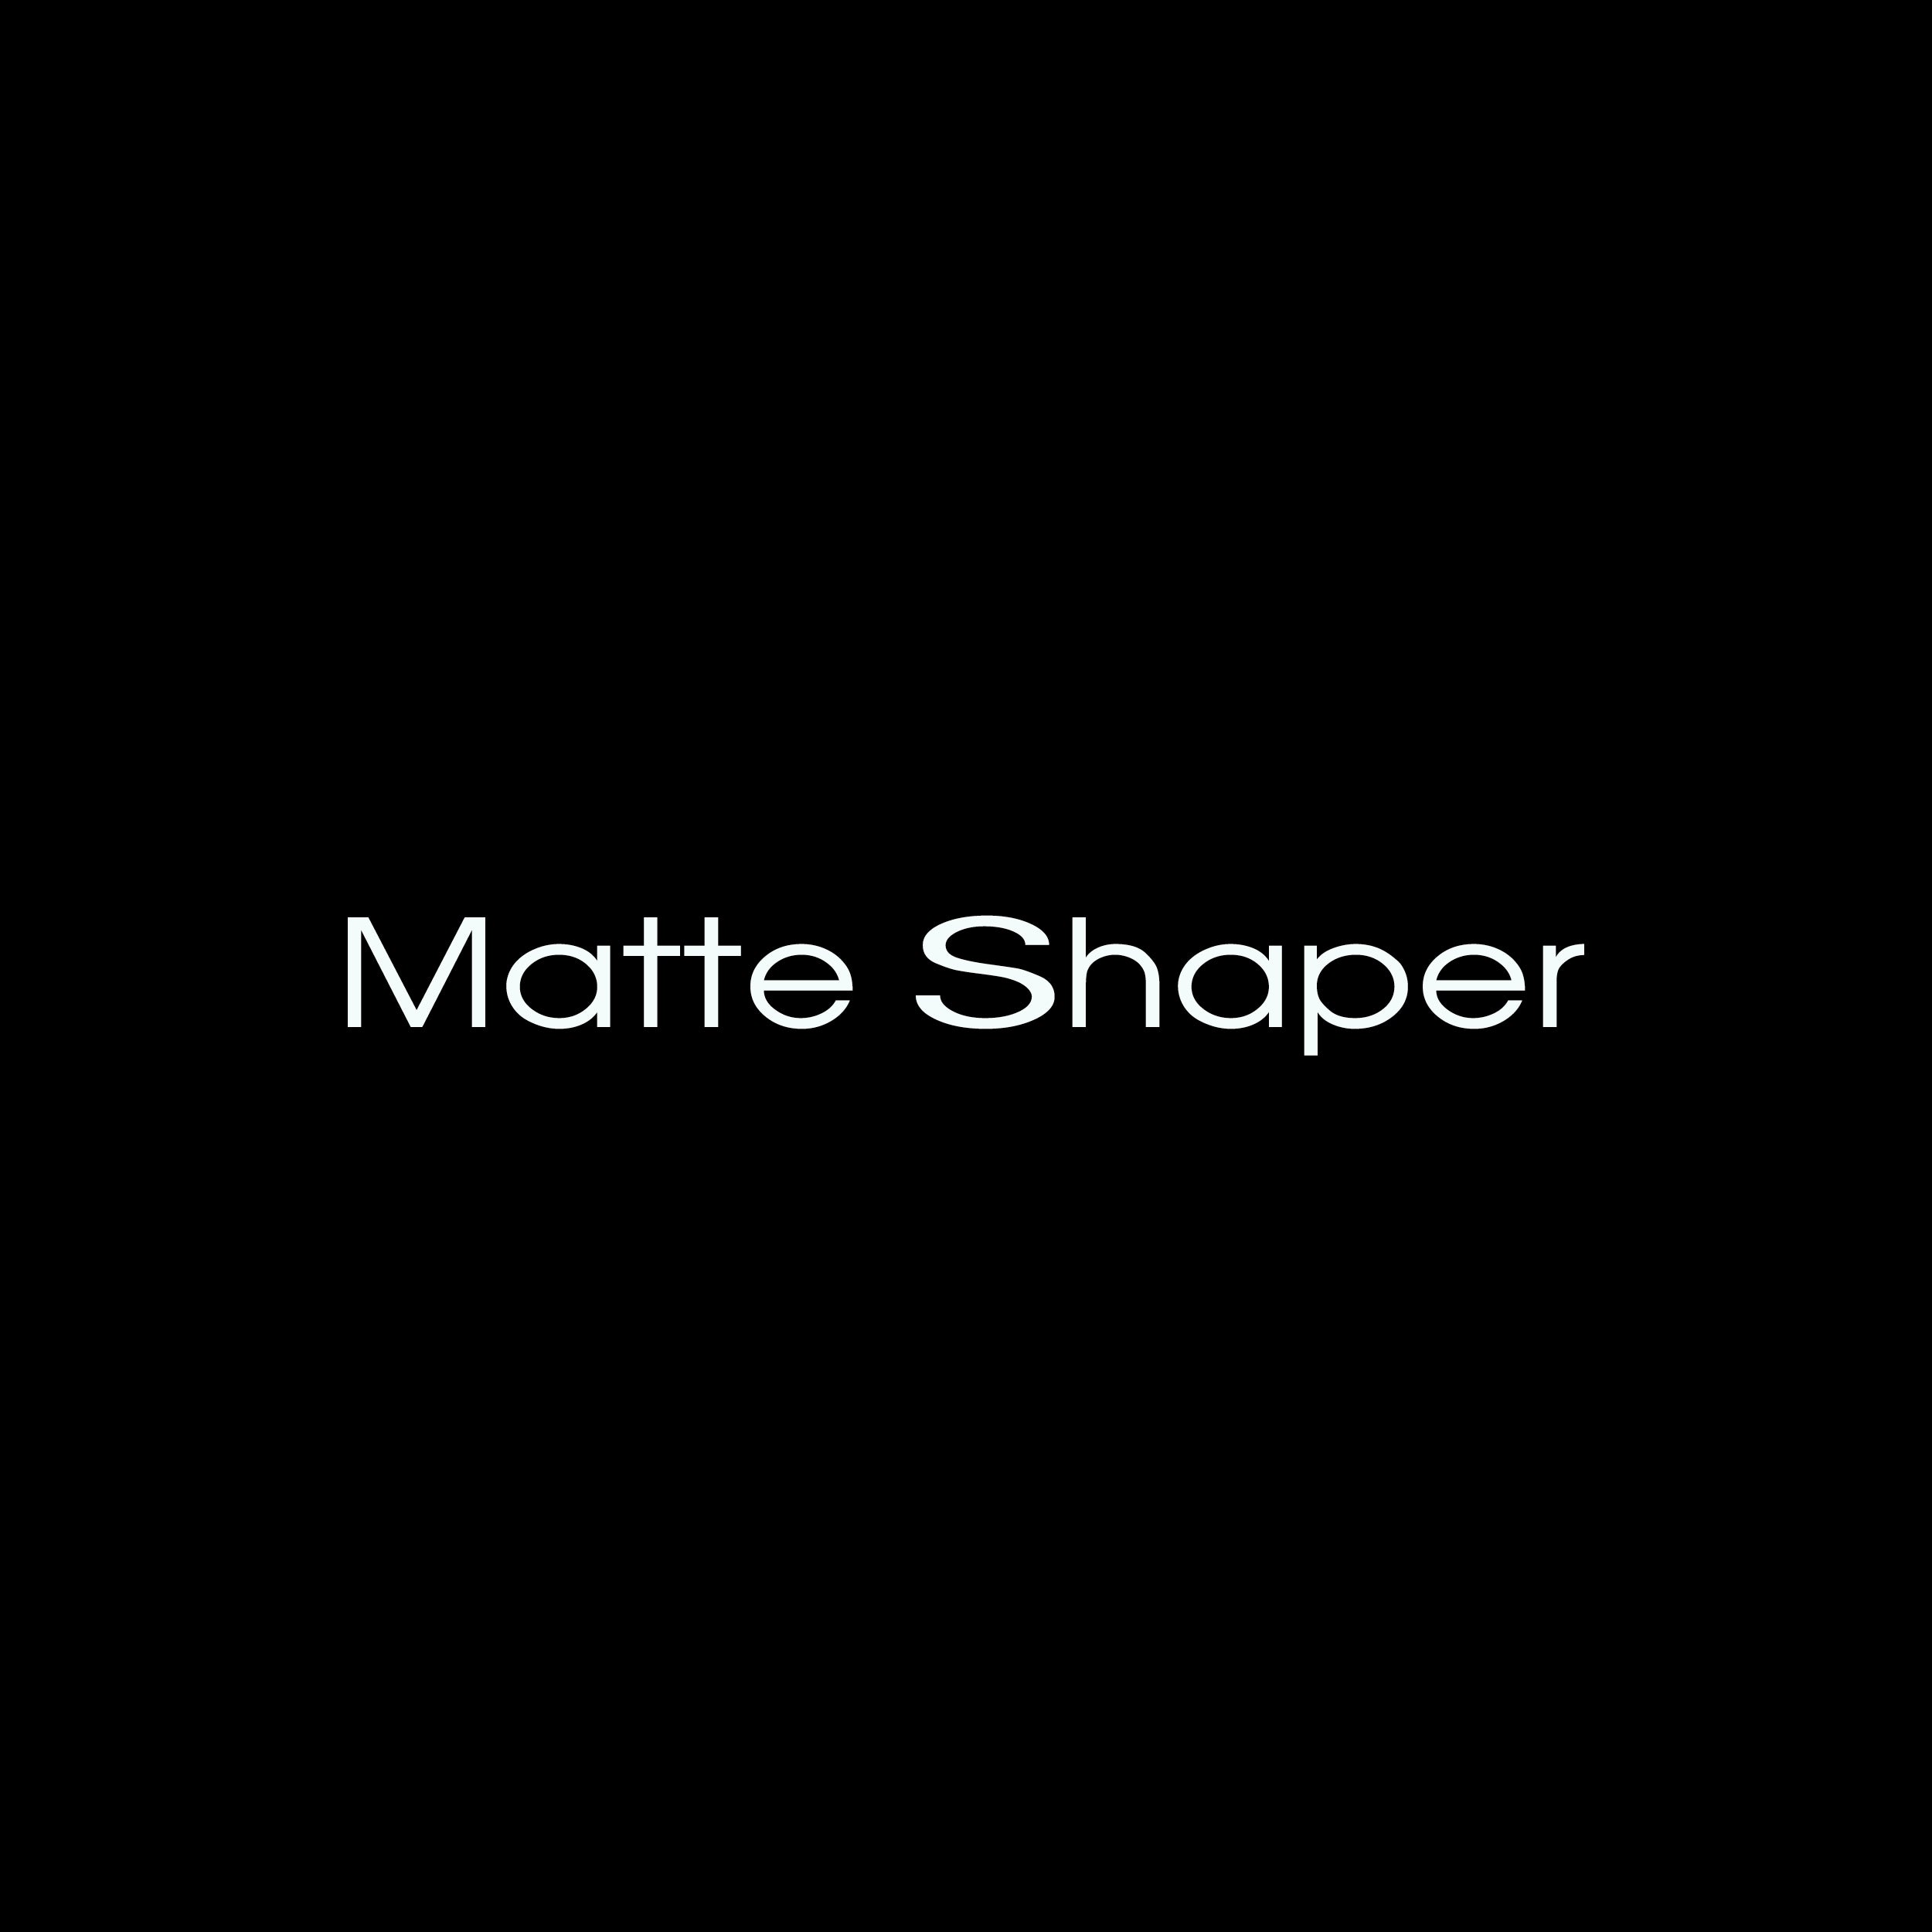 Matte Shaper